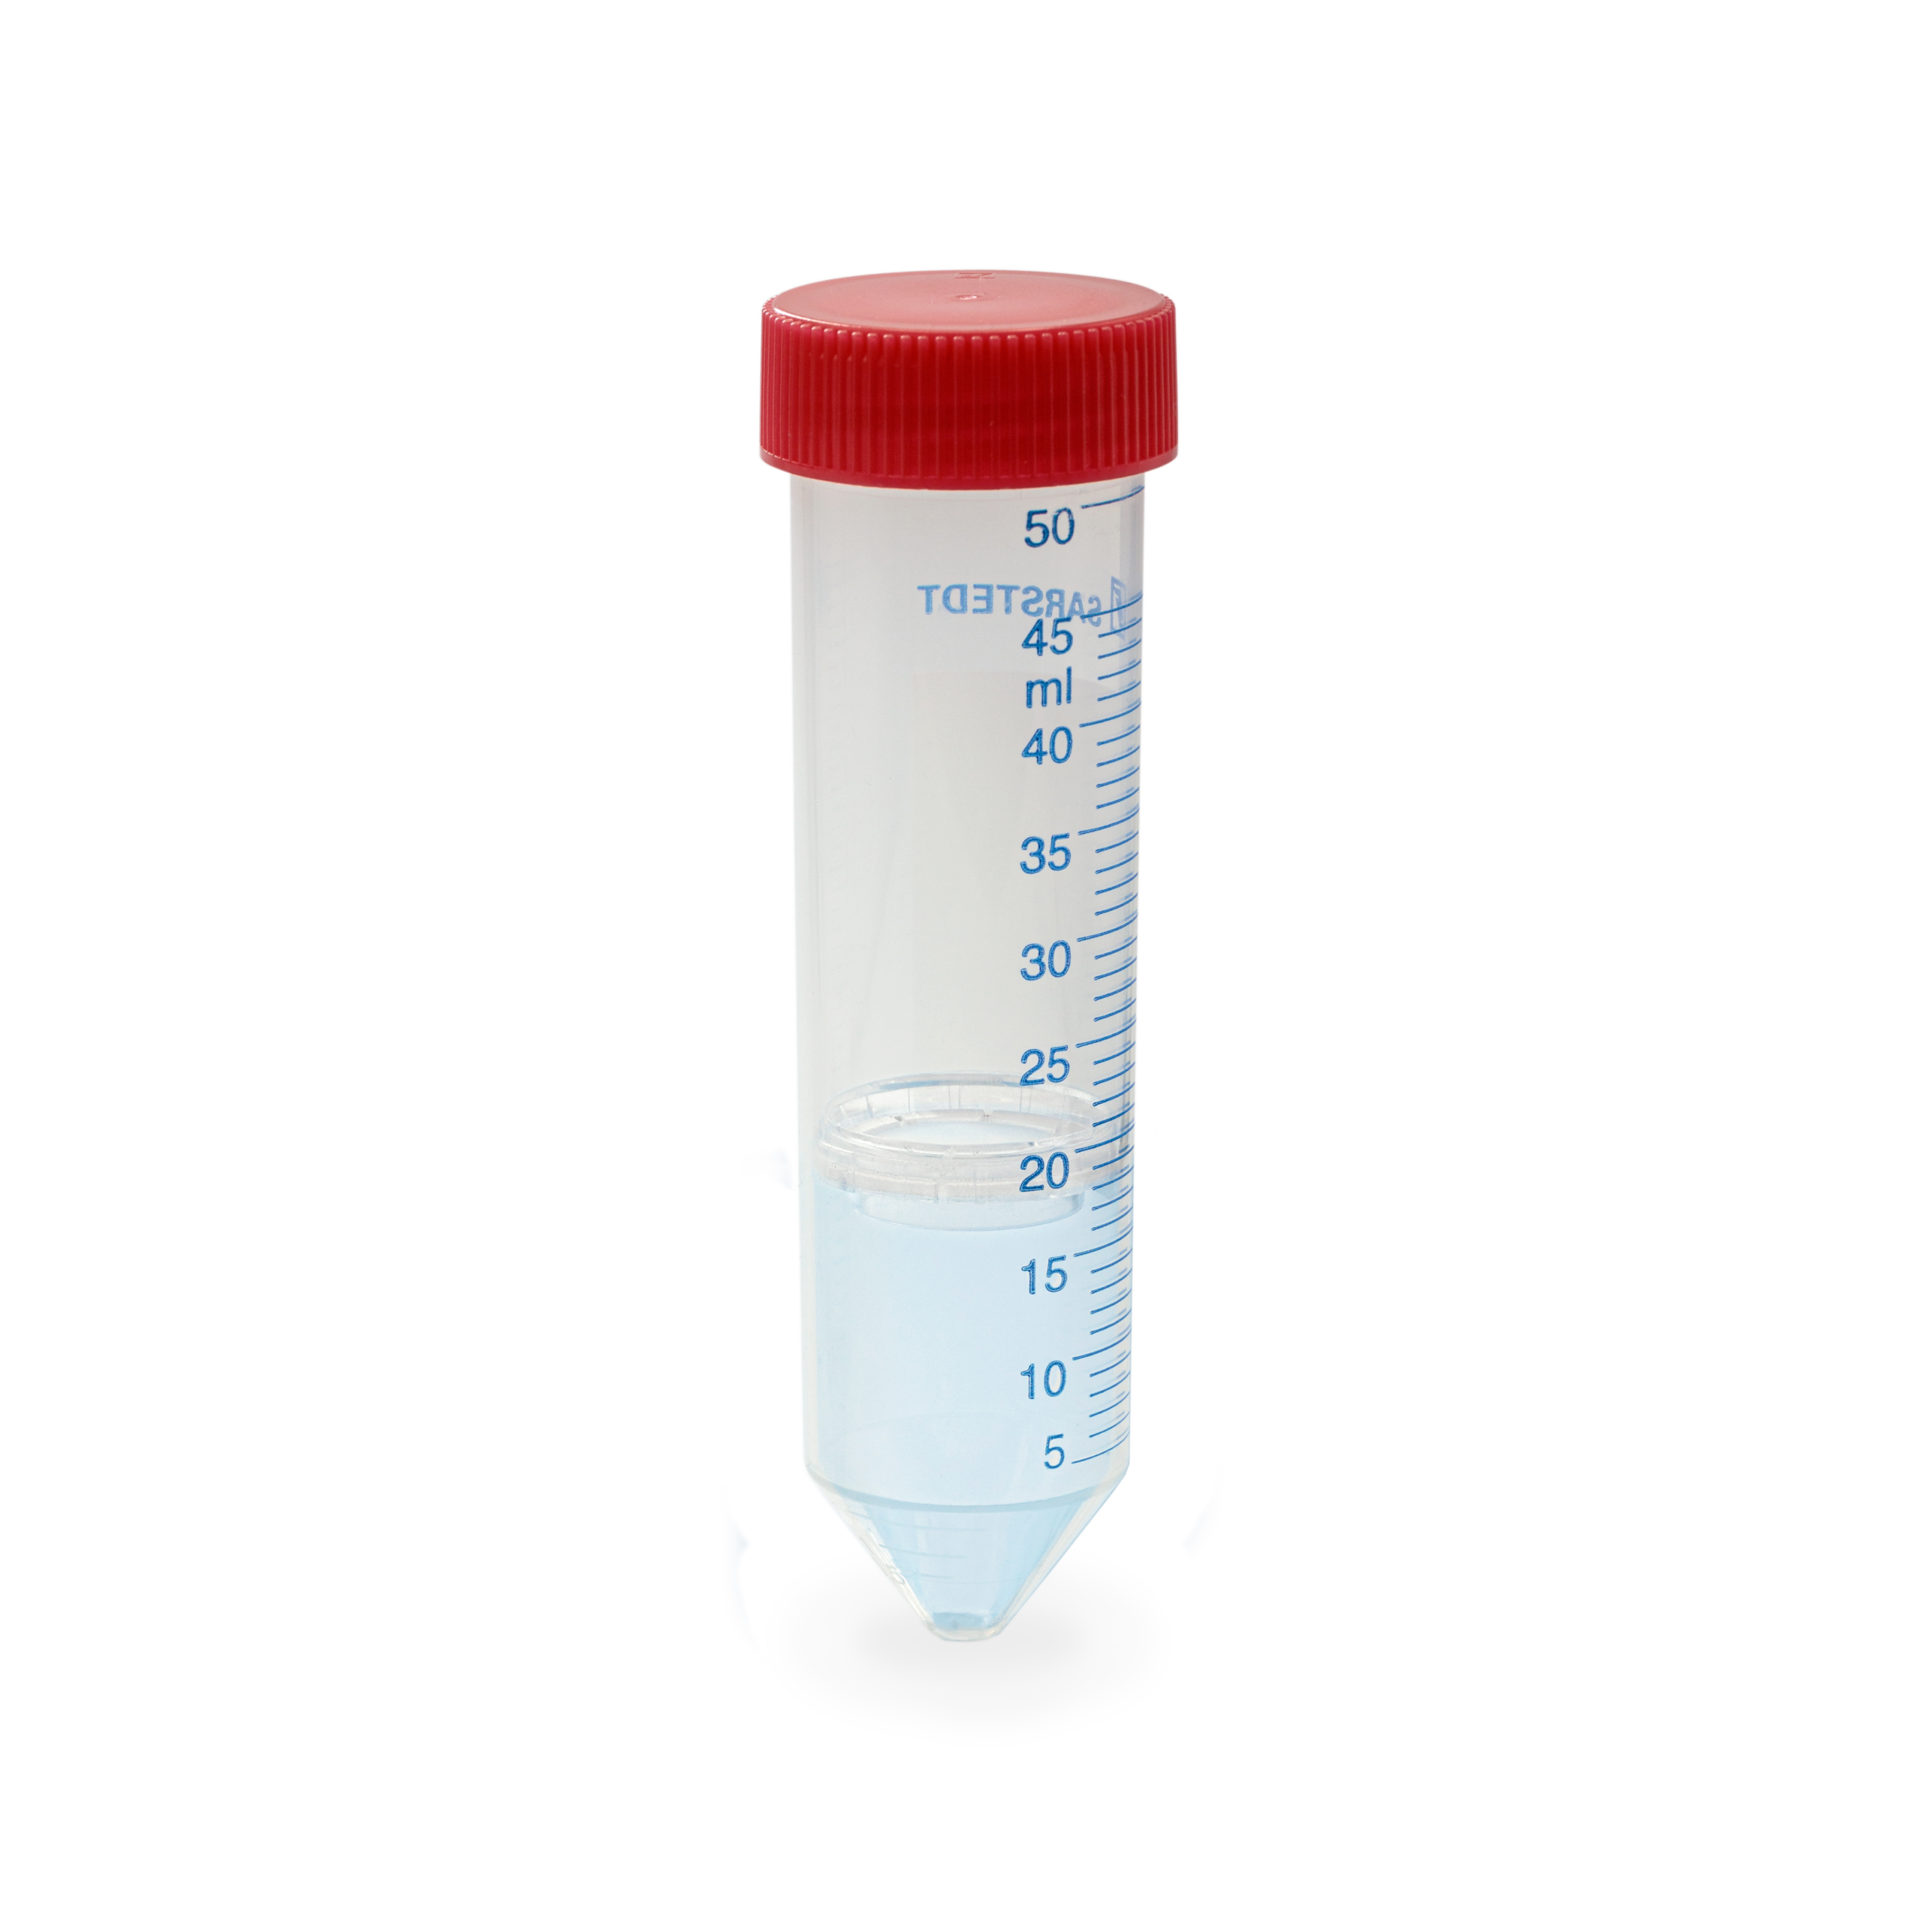 Plurimate 50 ml , sterile, prefilled PBMC Spin (1.077 g/ml)